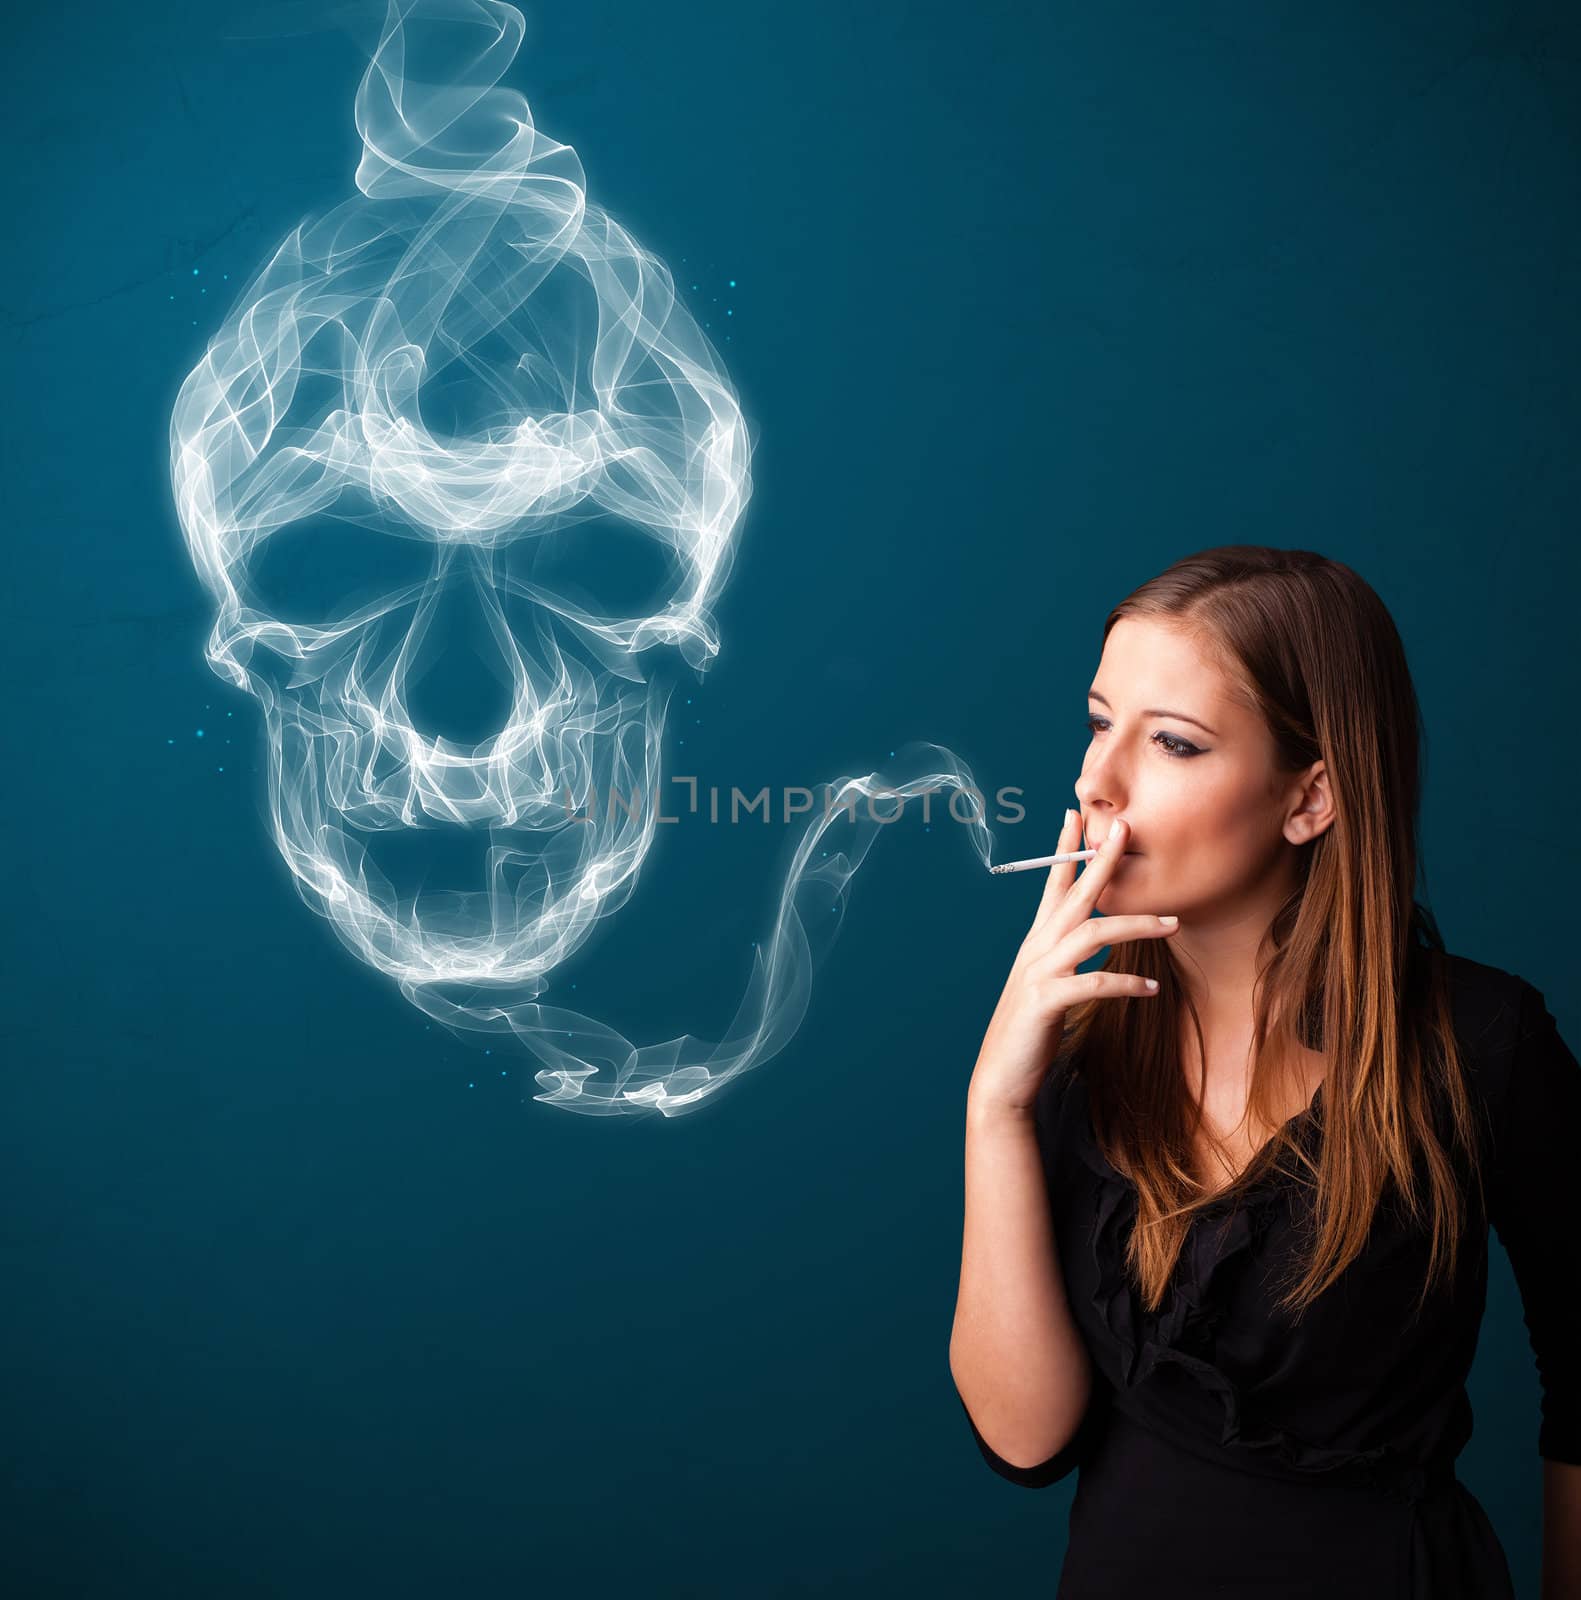 Pretty young woman smoking dangerous cigarette with toxic skull smoke 